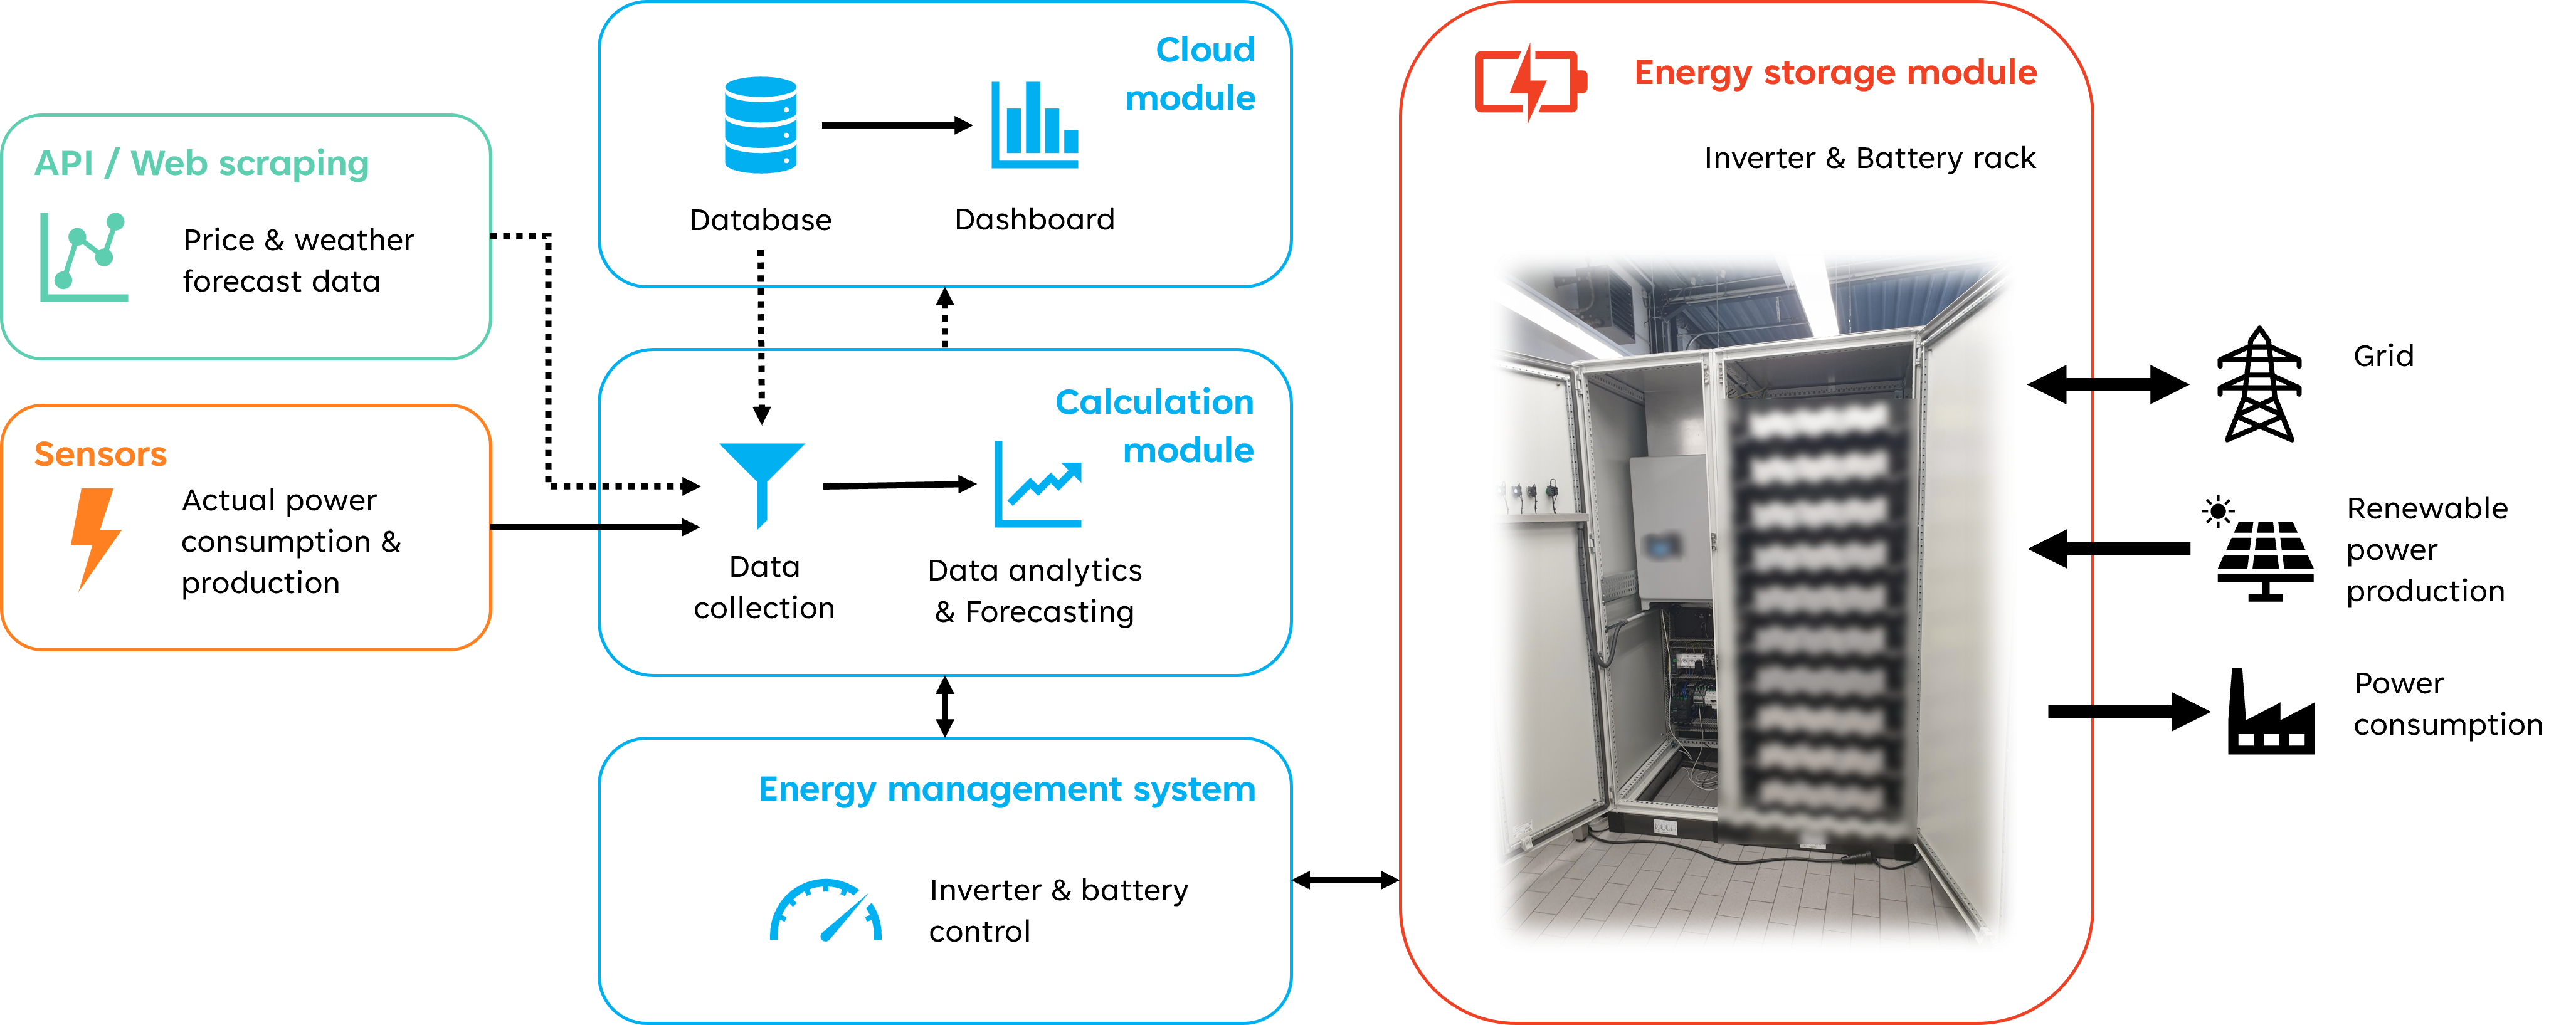 ART Robotics Smart Energy Storage System Overview